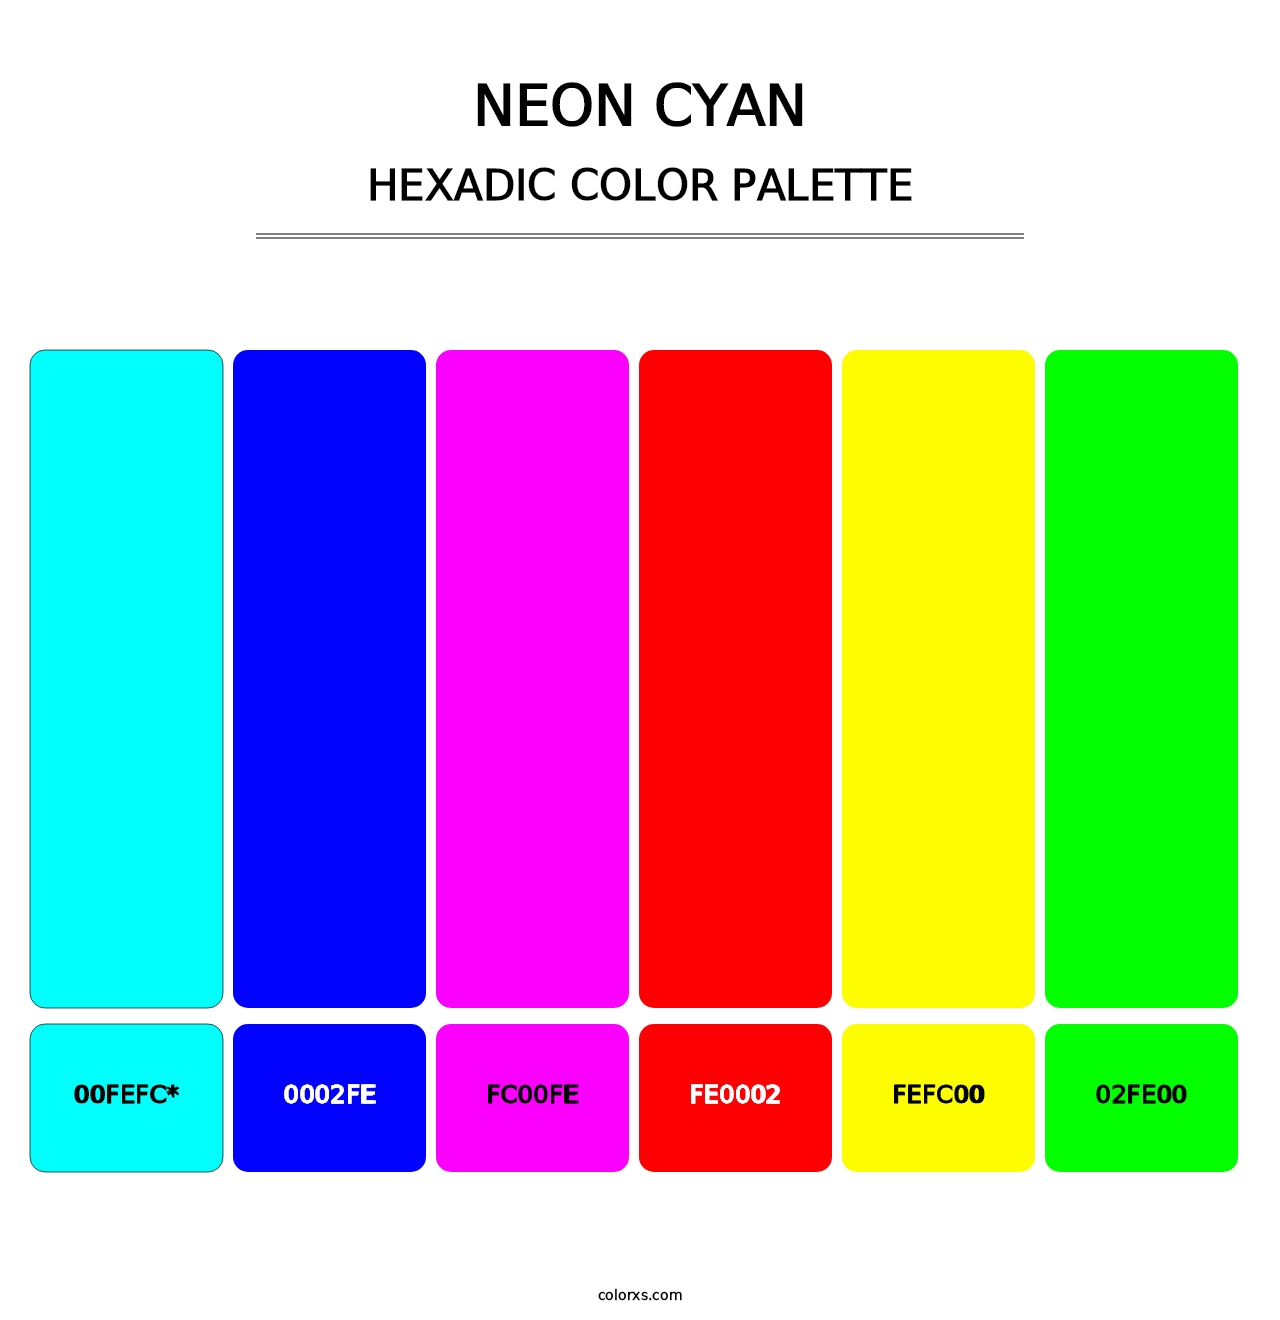 Neon Cyan - Hexadic Color Palette